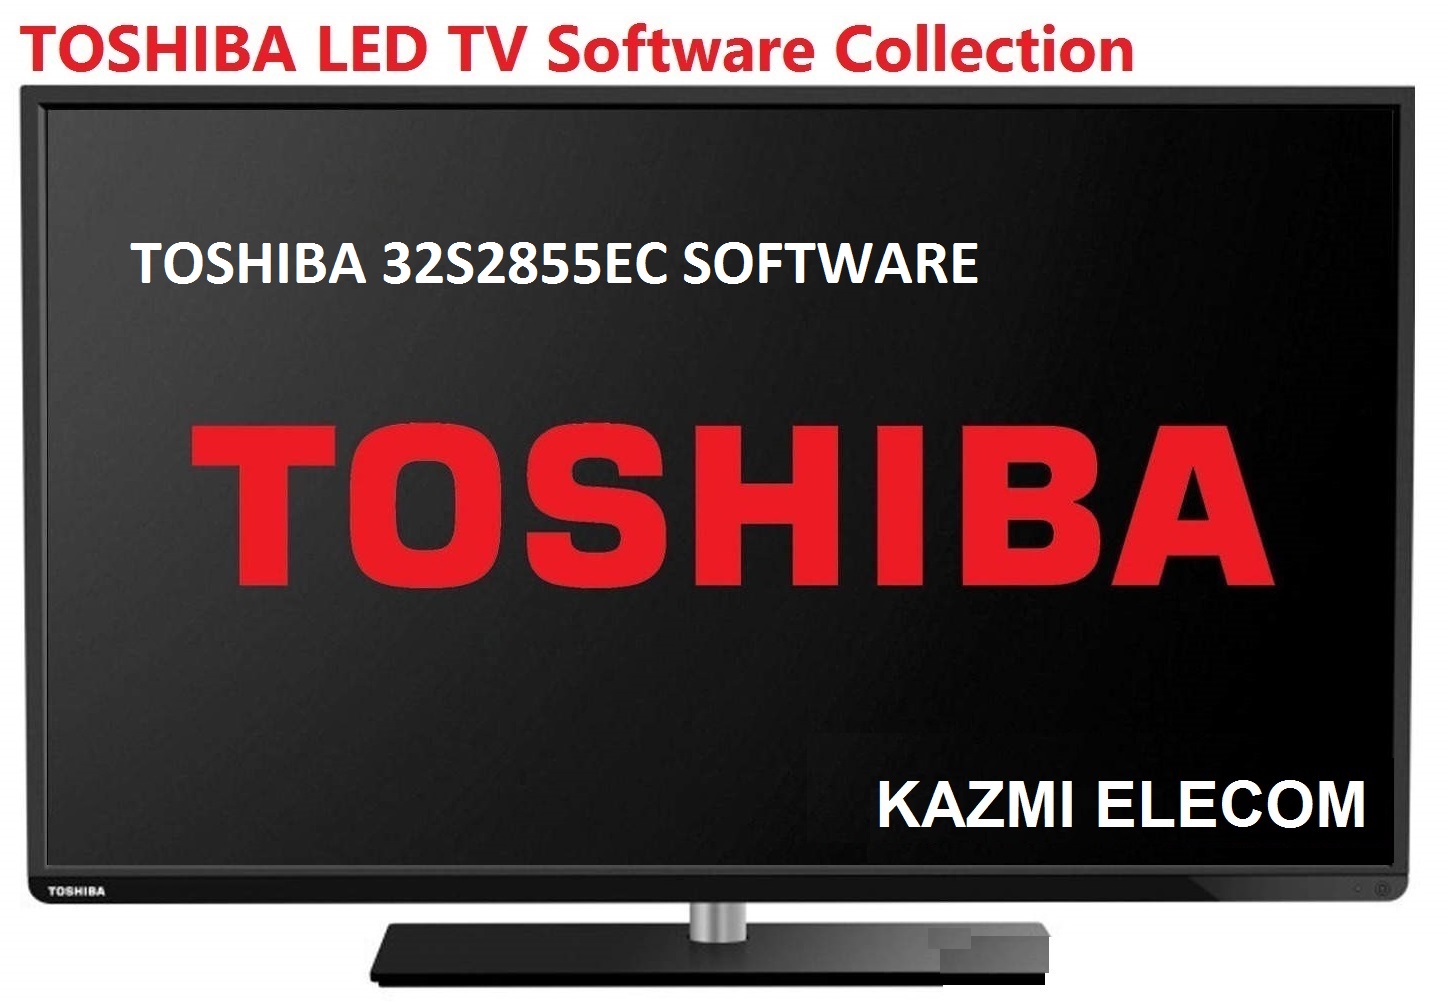 Toshiba 32S2855Ec